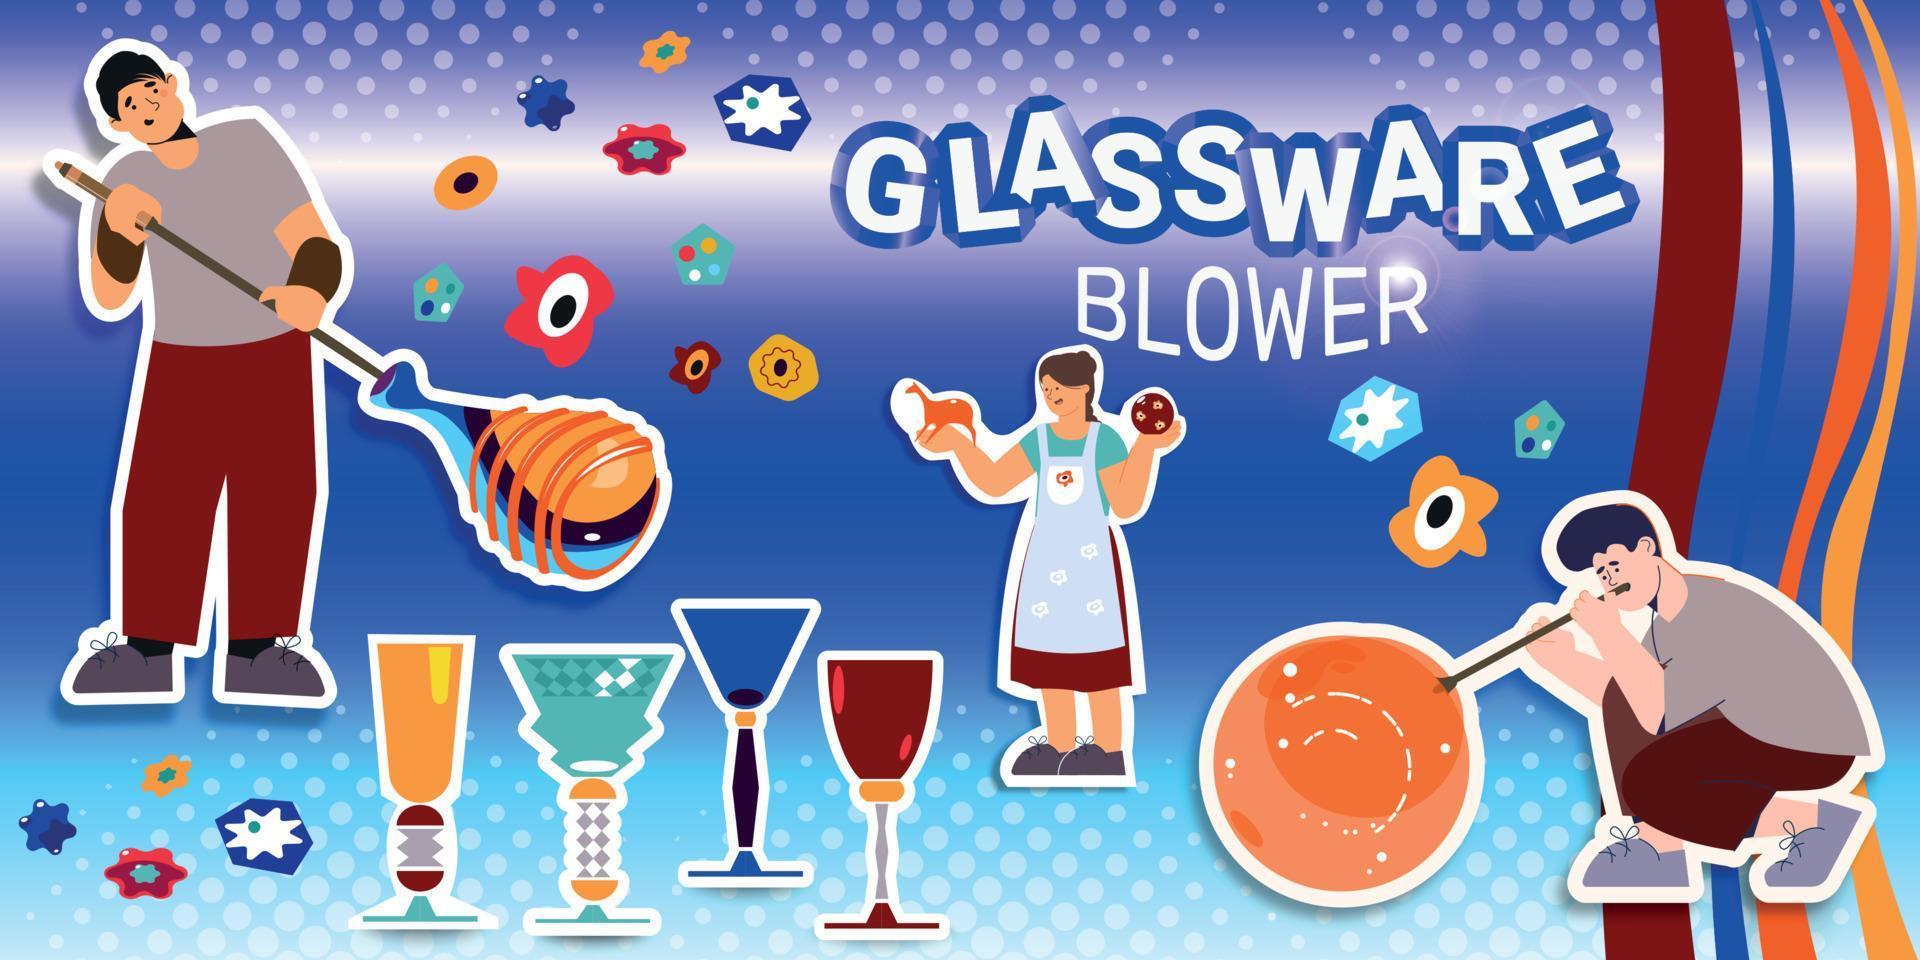 Glassware Blower Flat Collage vector